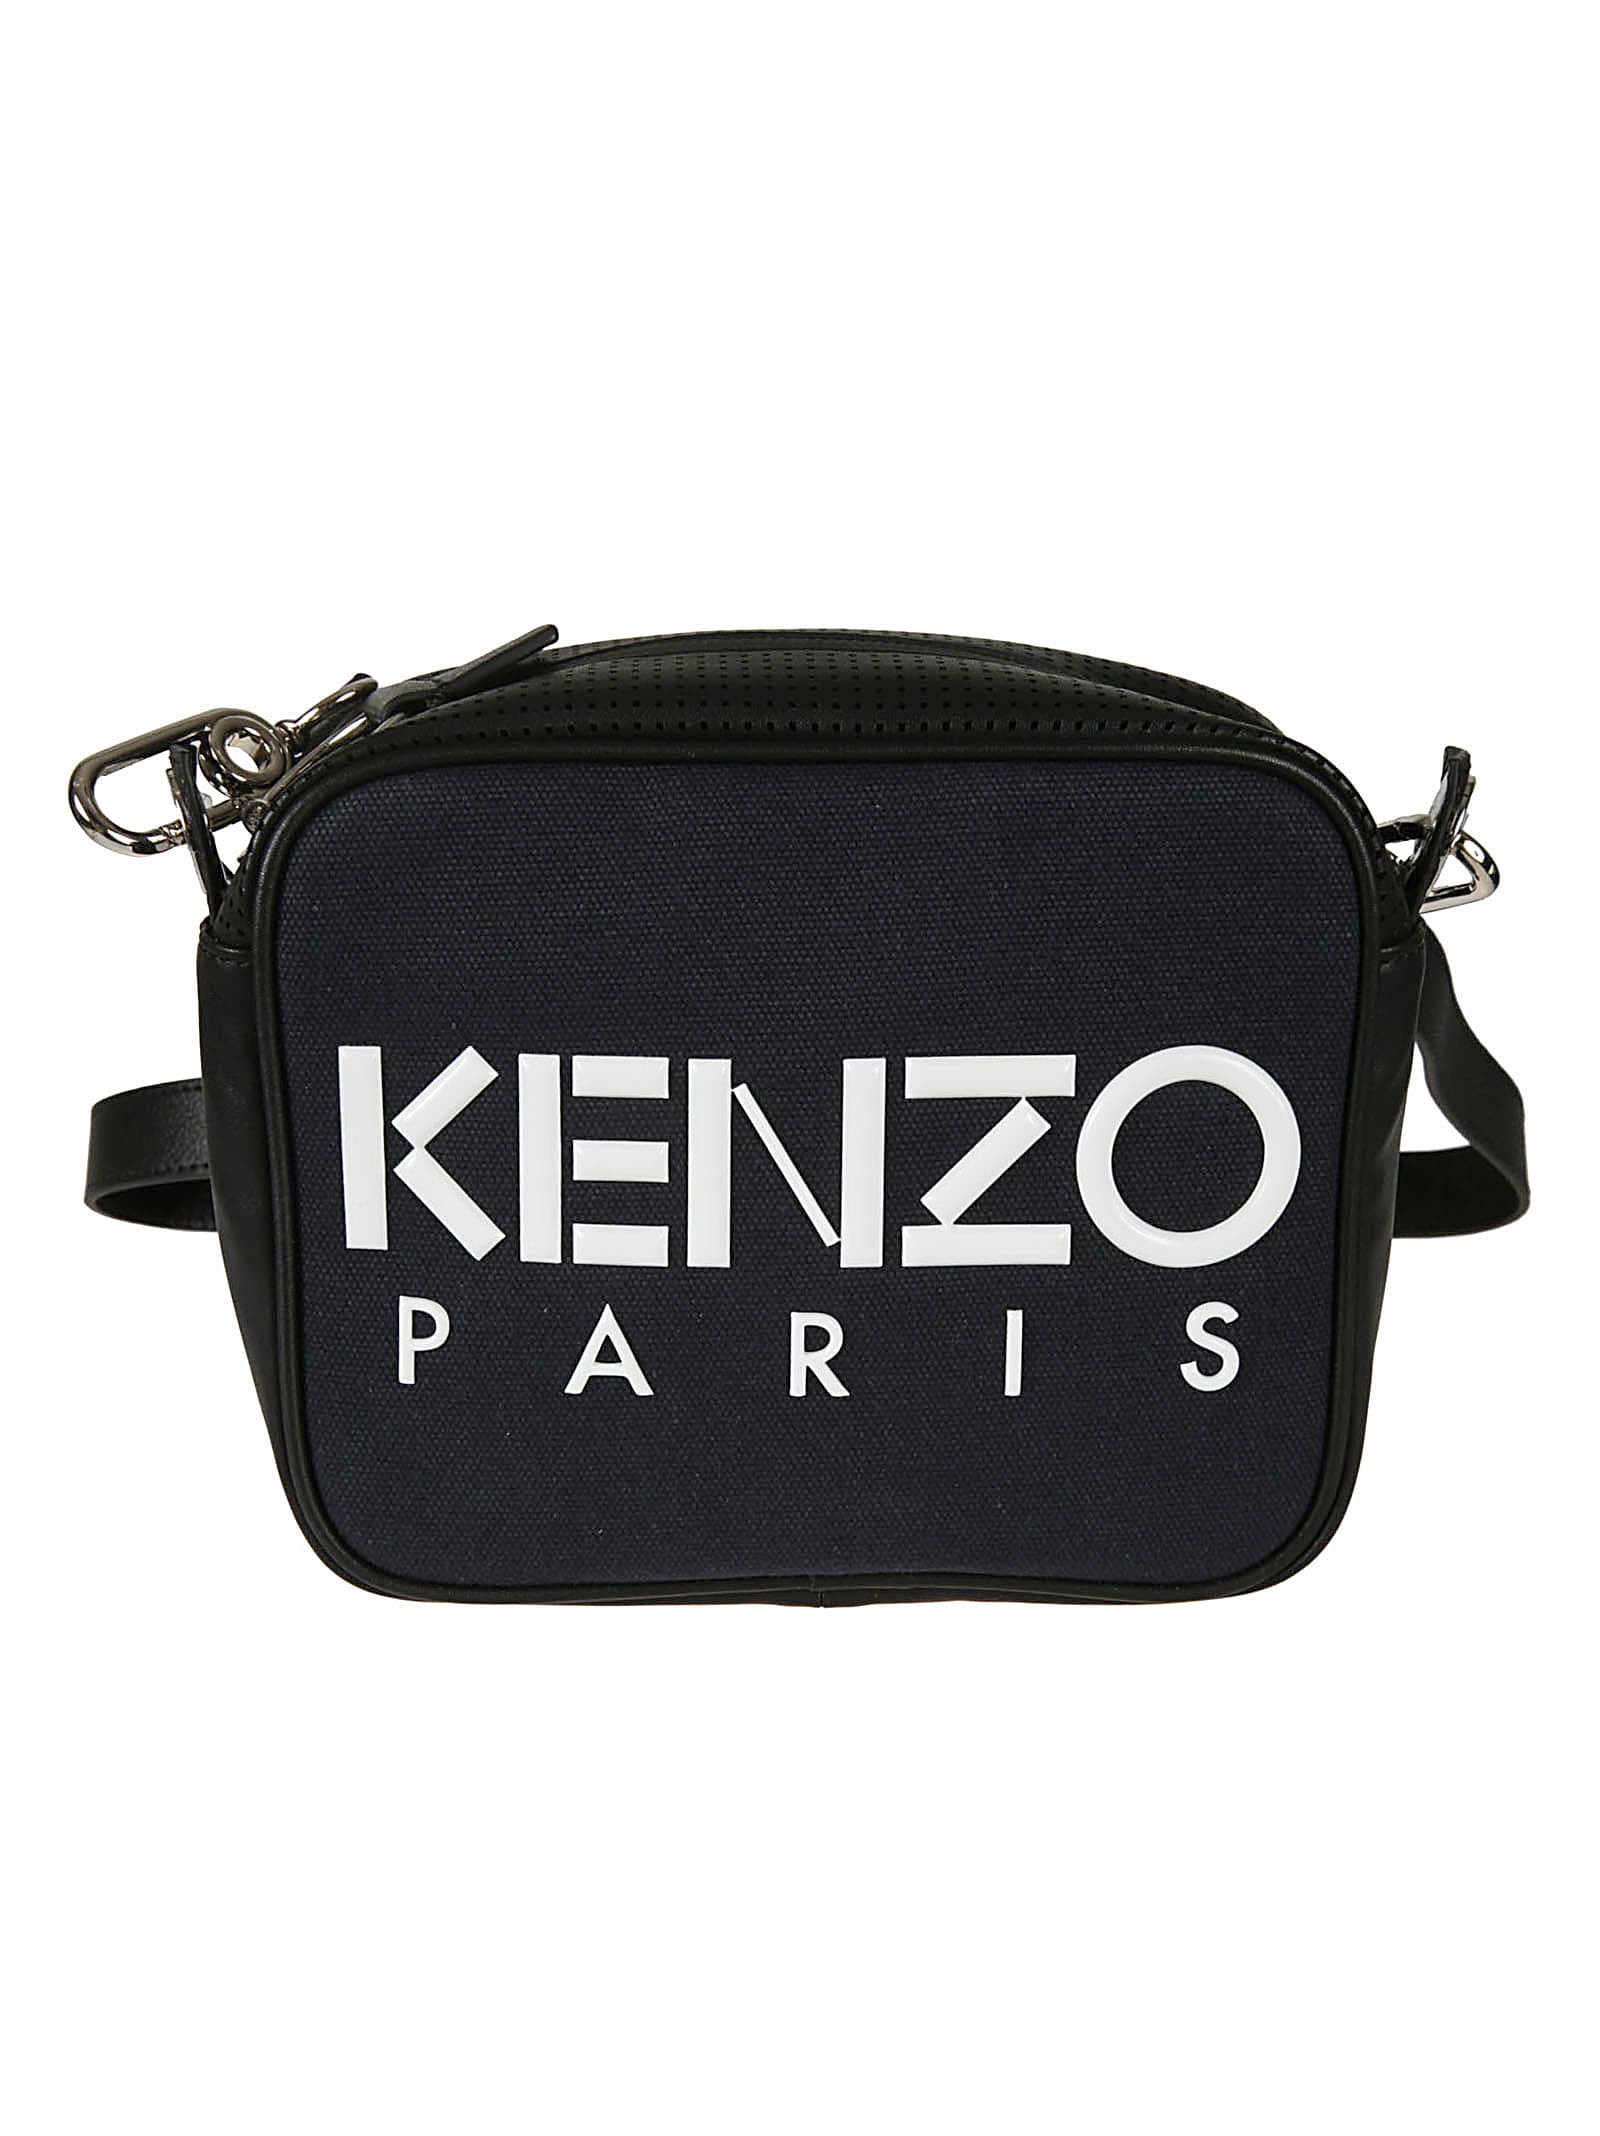 kenzo messenger bag - 52% remise 